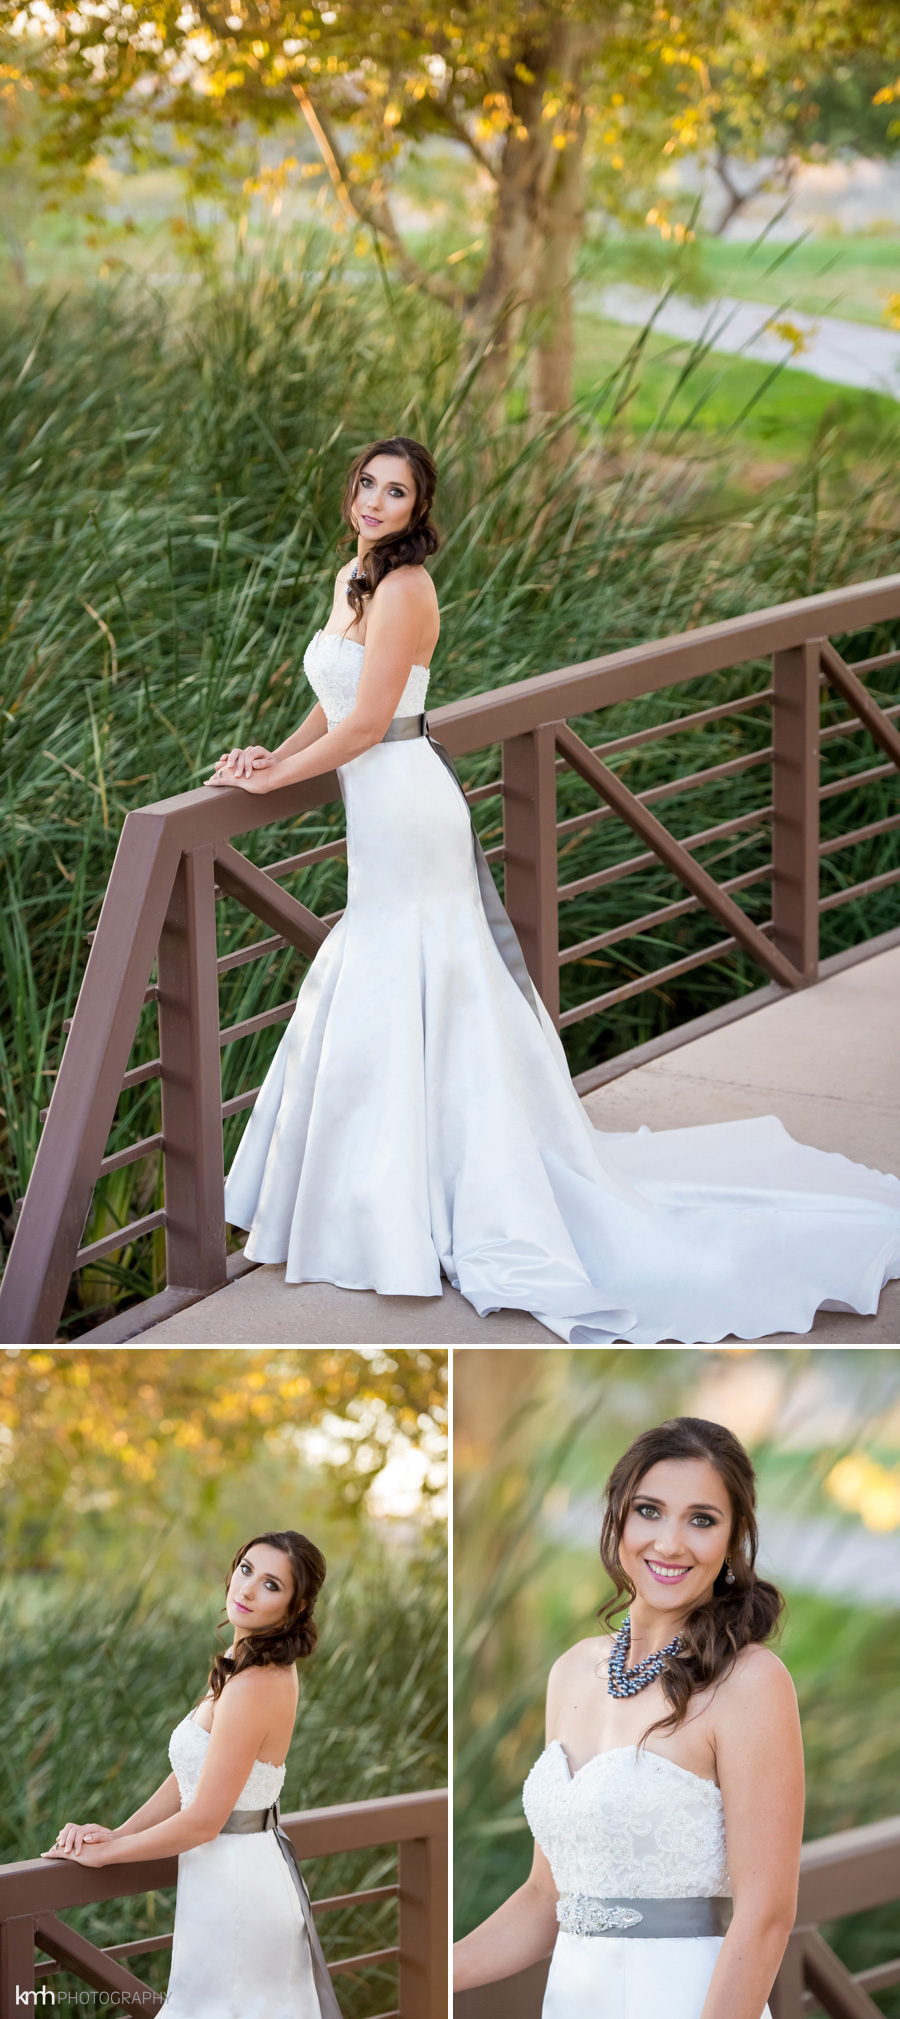 Anthem Country Club Wedding | KMH Photography, Las Vegas Wedding Photographer